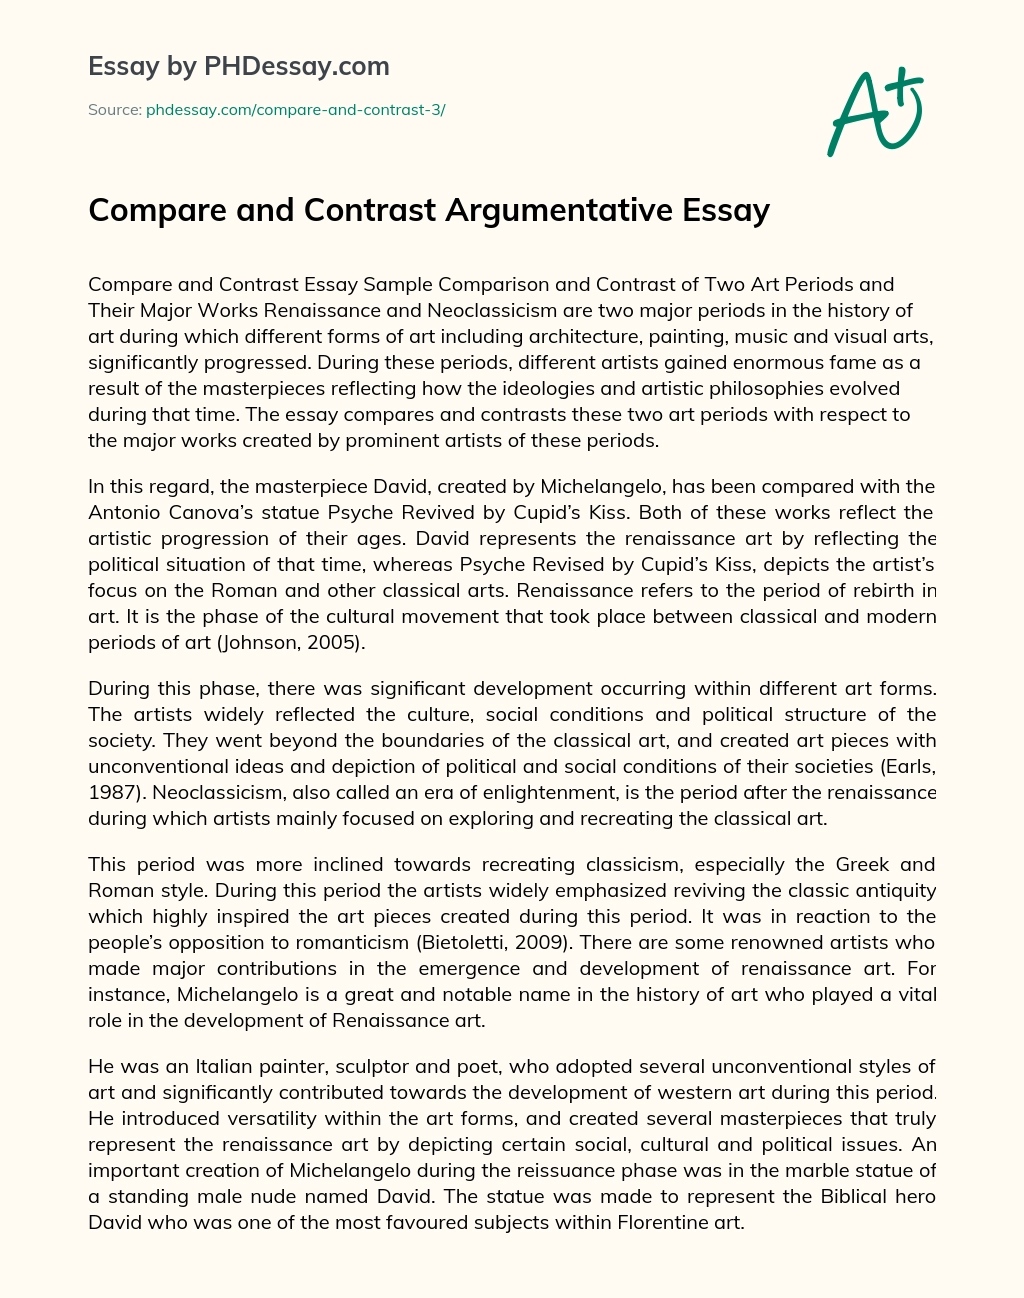 Compare and Contrast Argumentative Essay essay